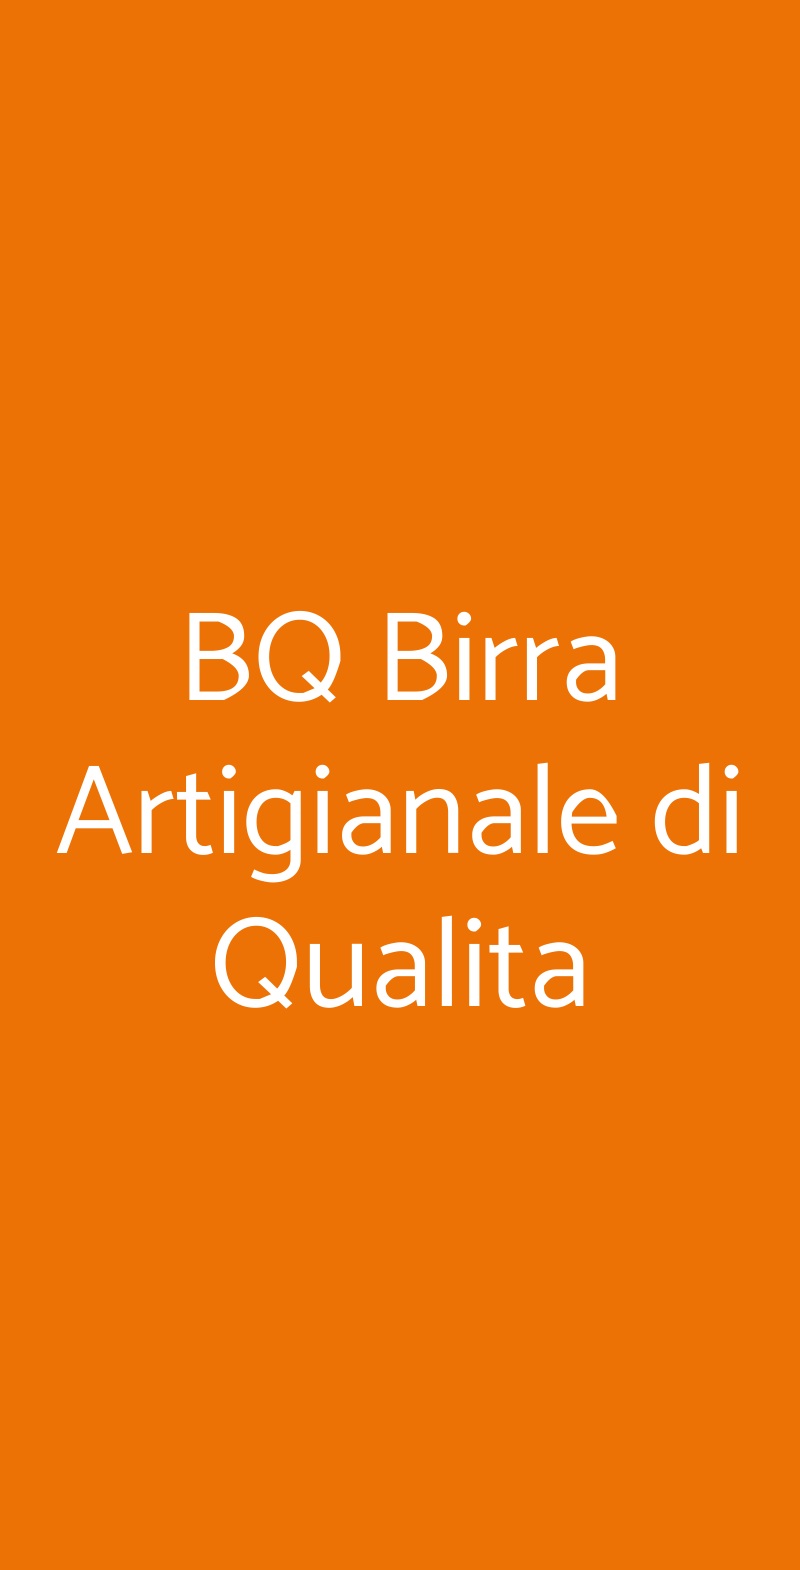 BQ Birra Artigianale di Qualita Milano menù 1 pagina